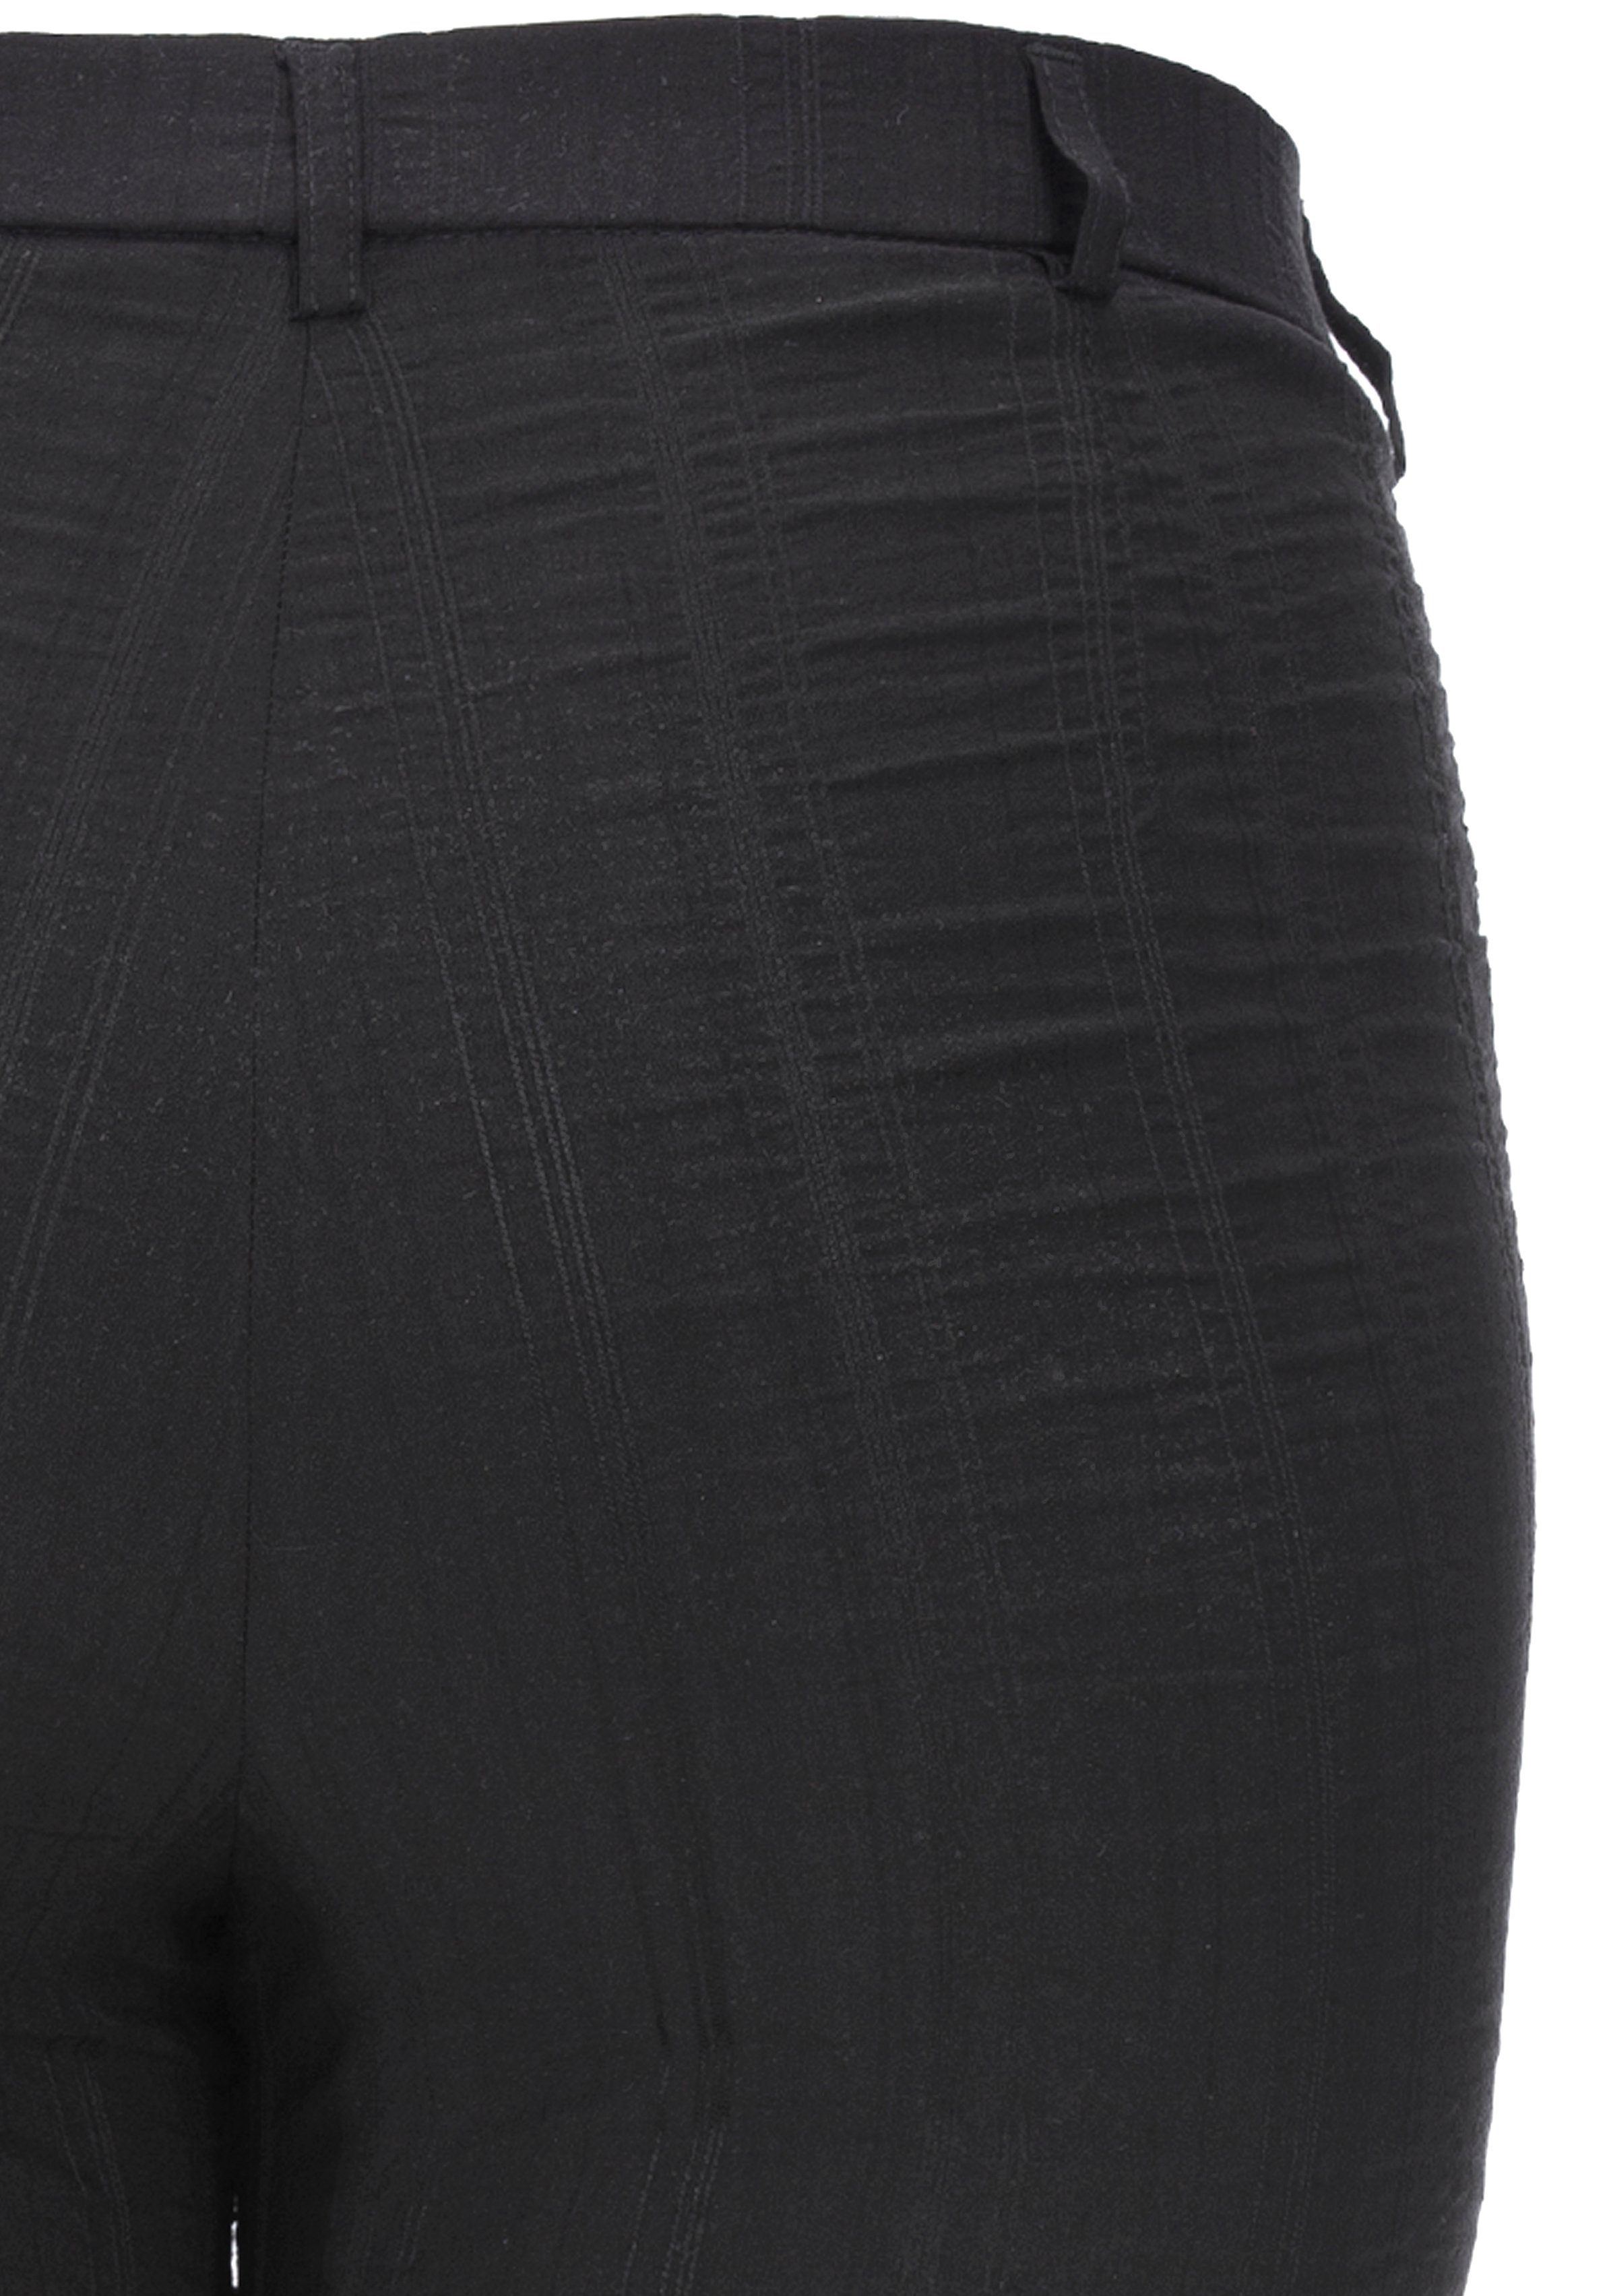 KjBRAND Stoffhose optimale Passform Bea Quer-Stretch in schwarz gestreift